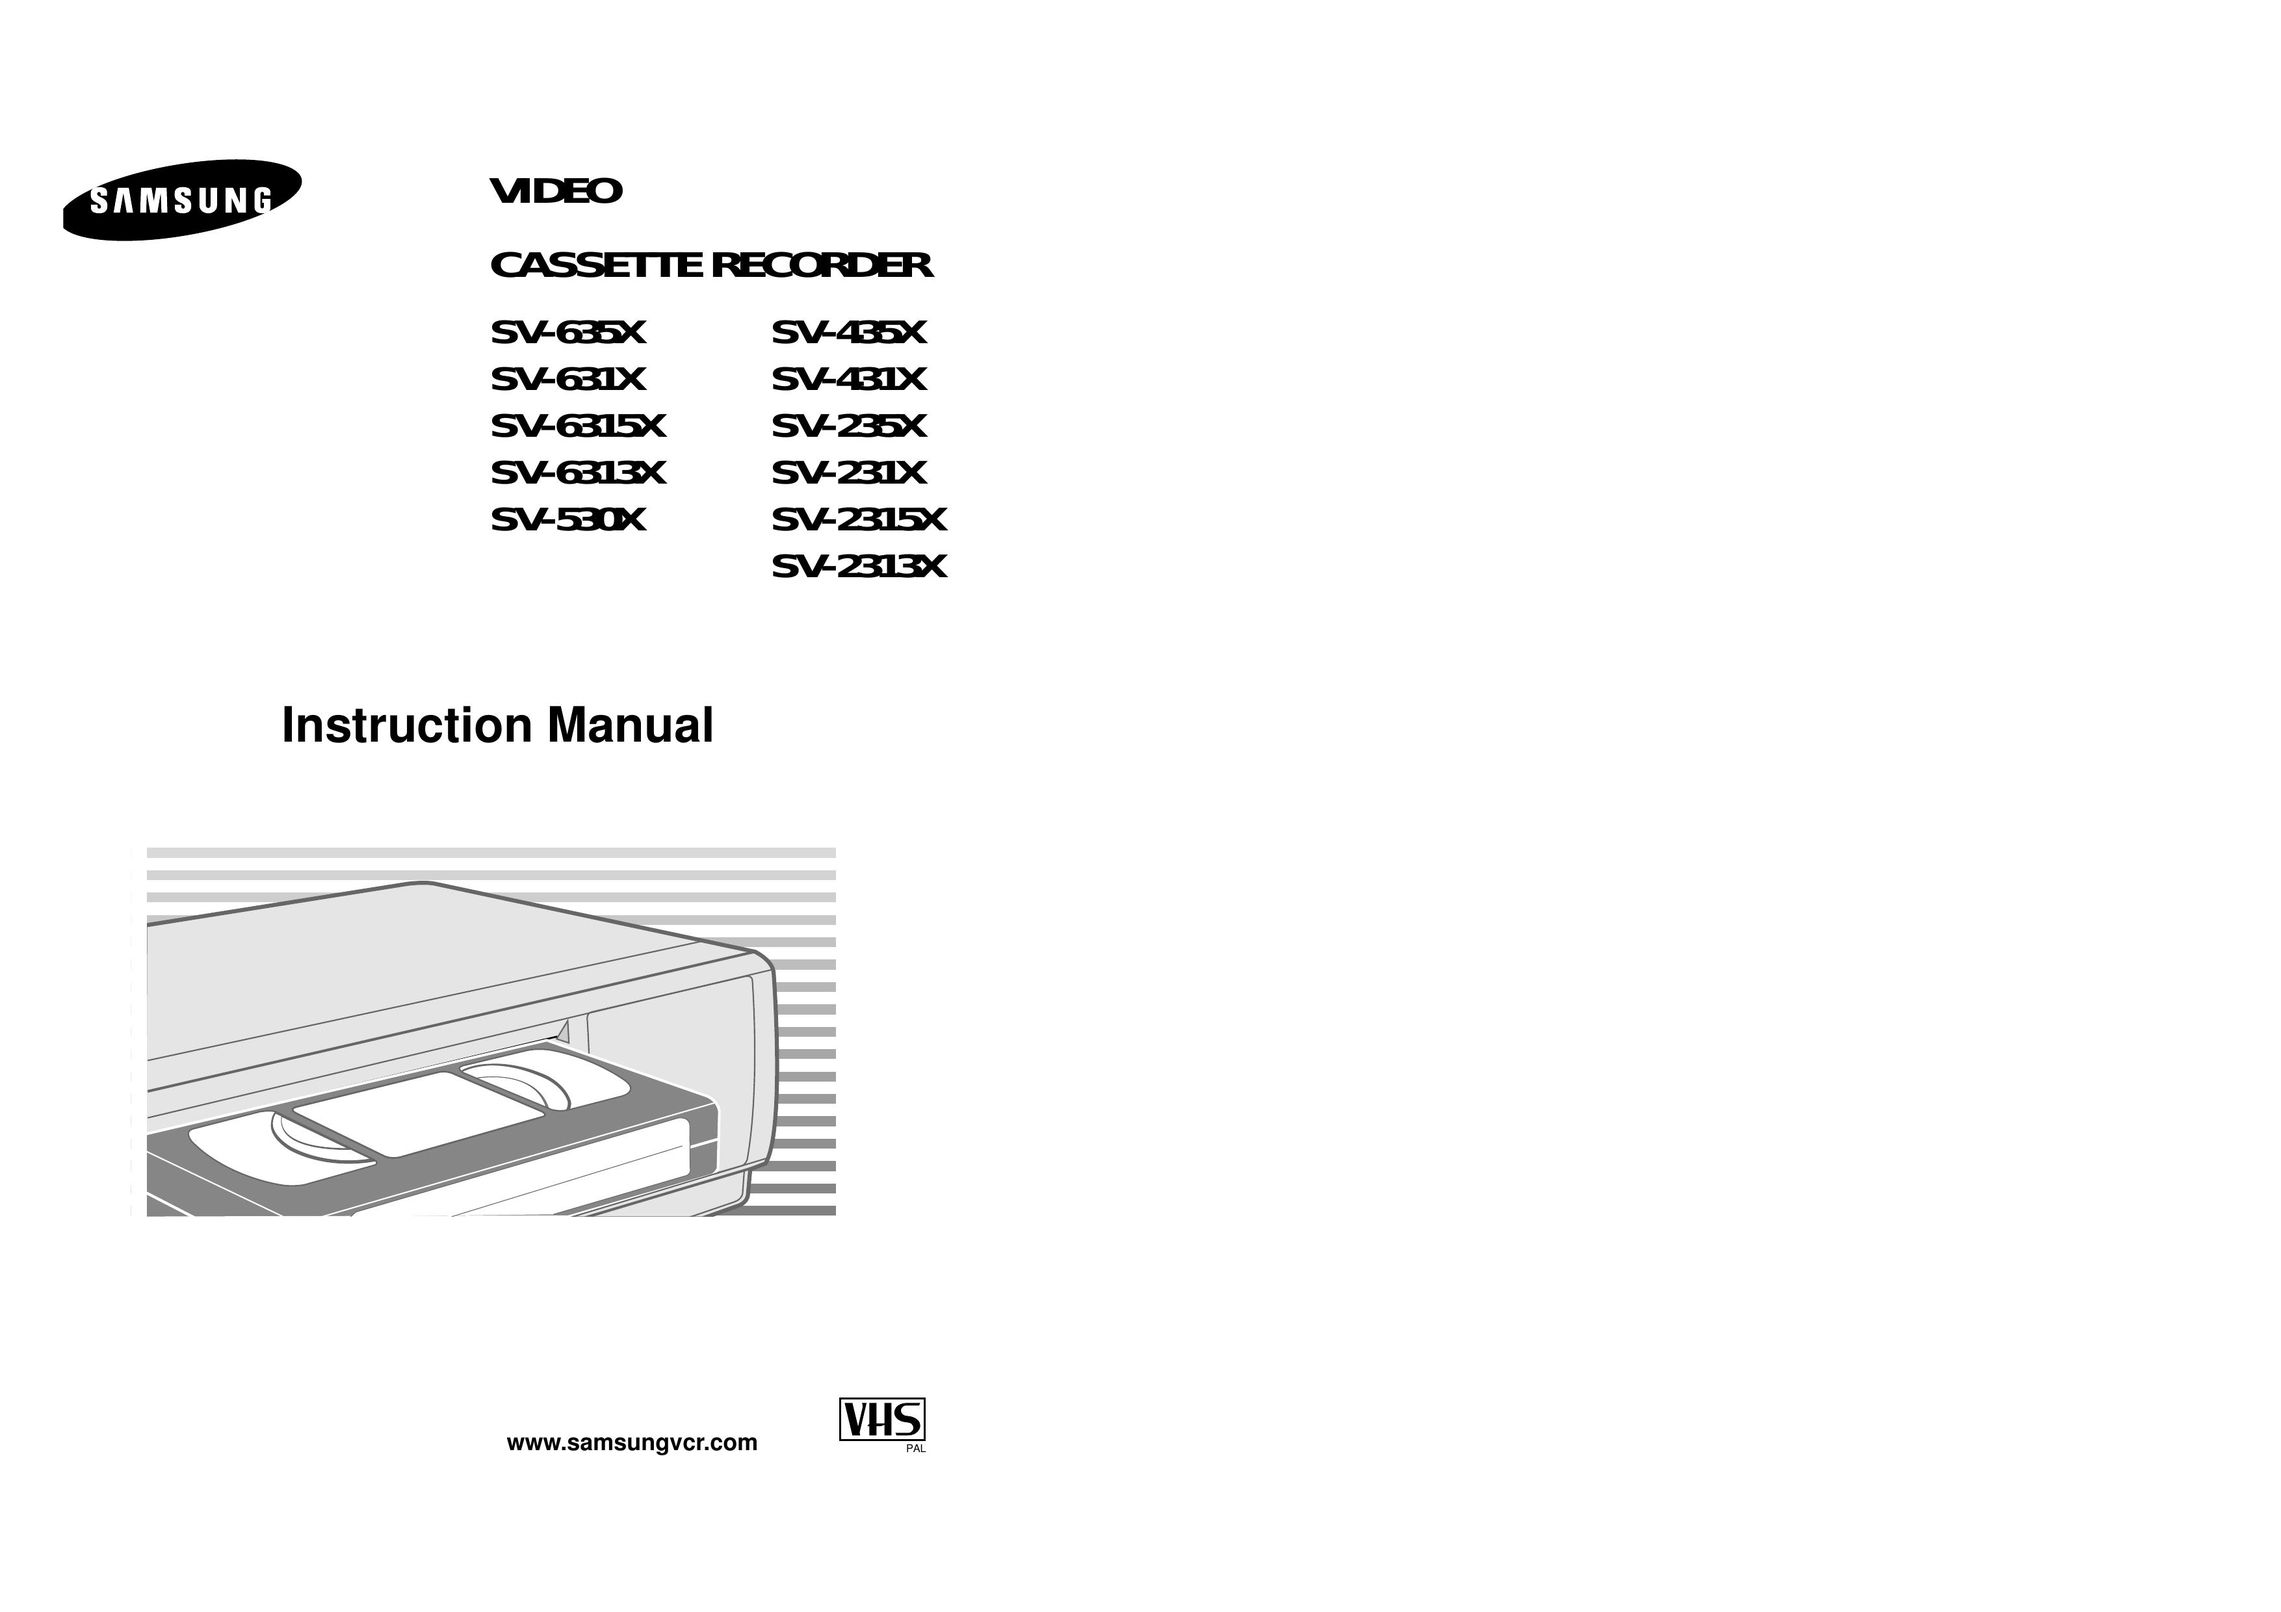 Samsung SV-2315X Cassette Player User Manual